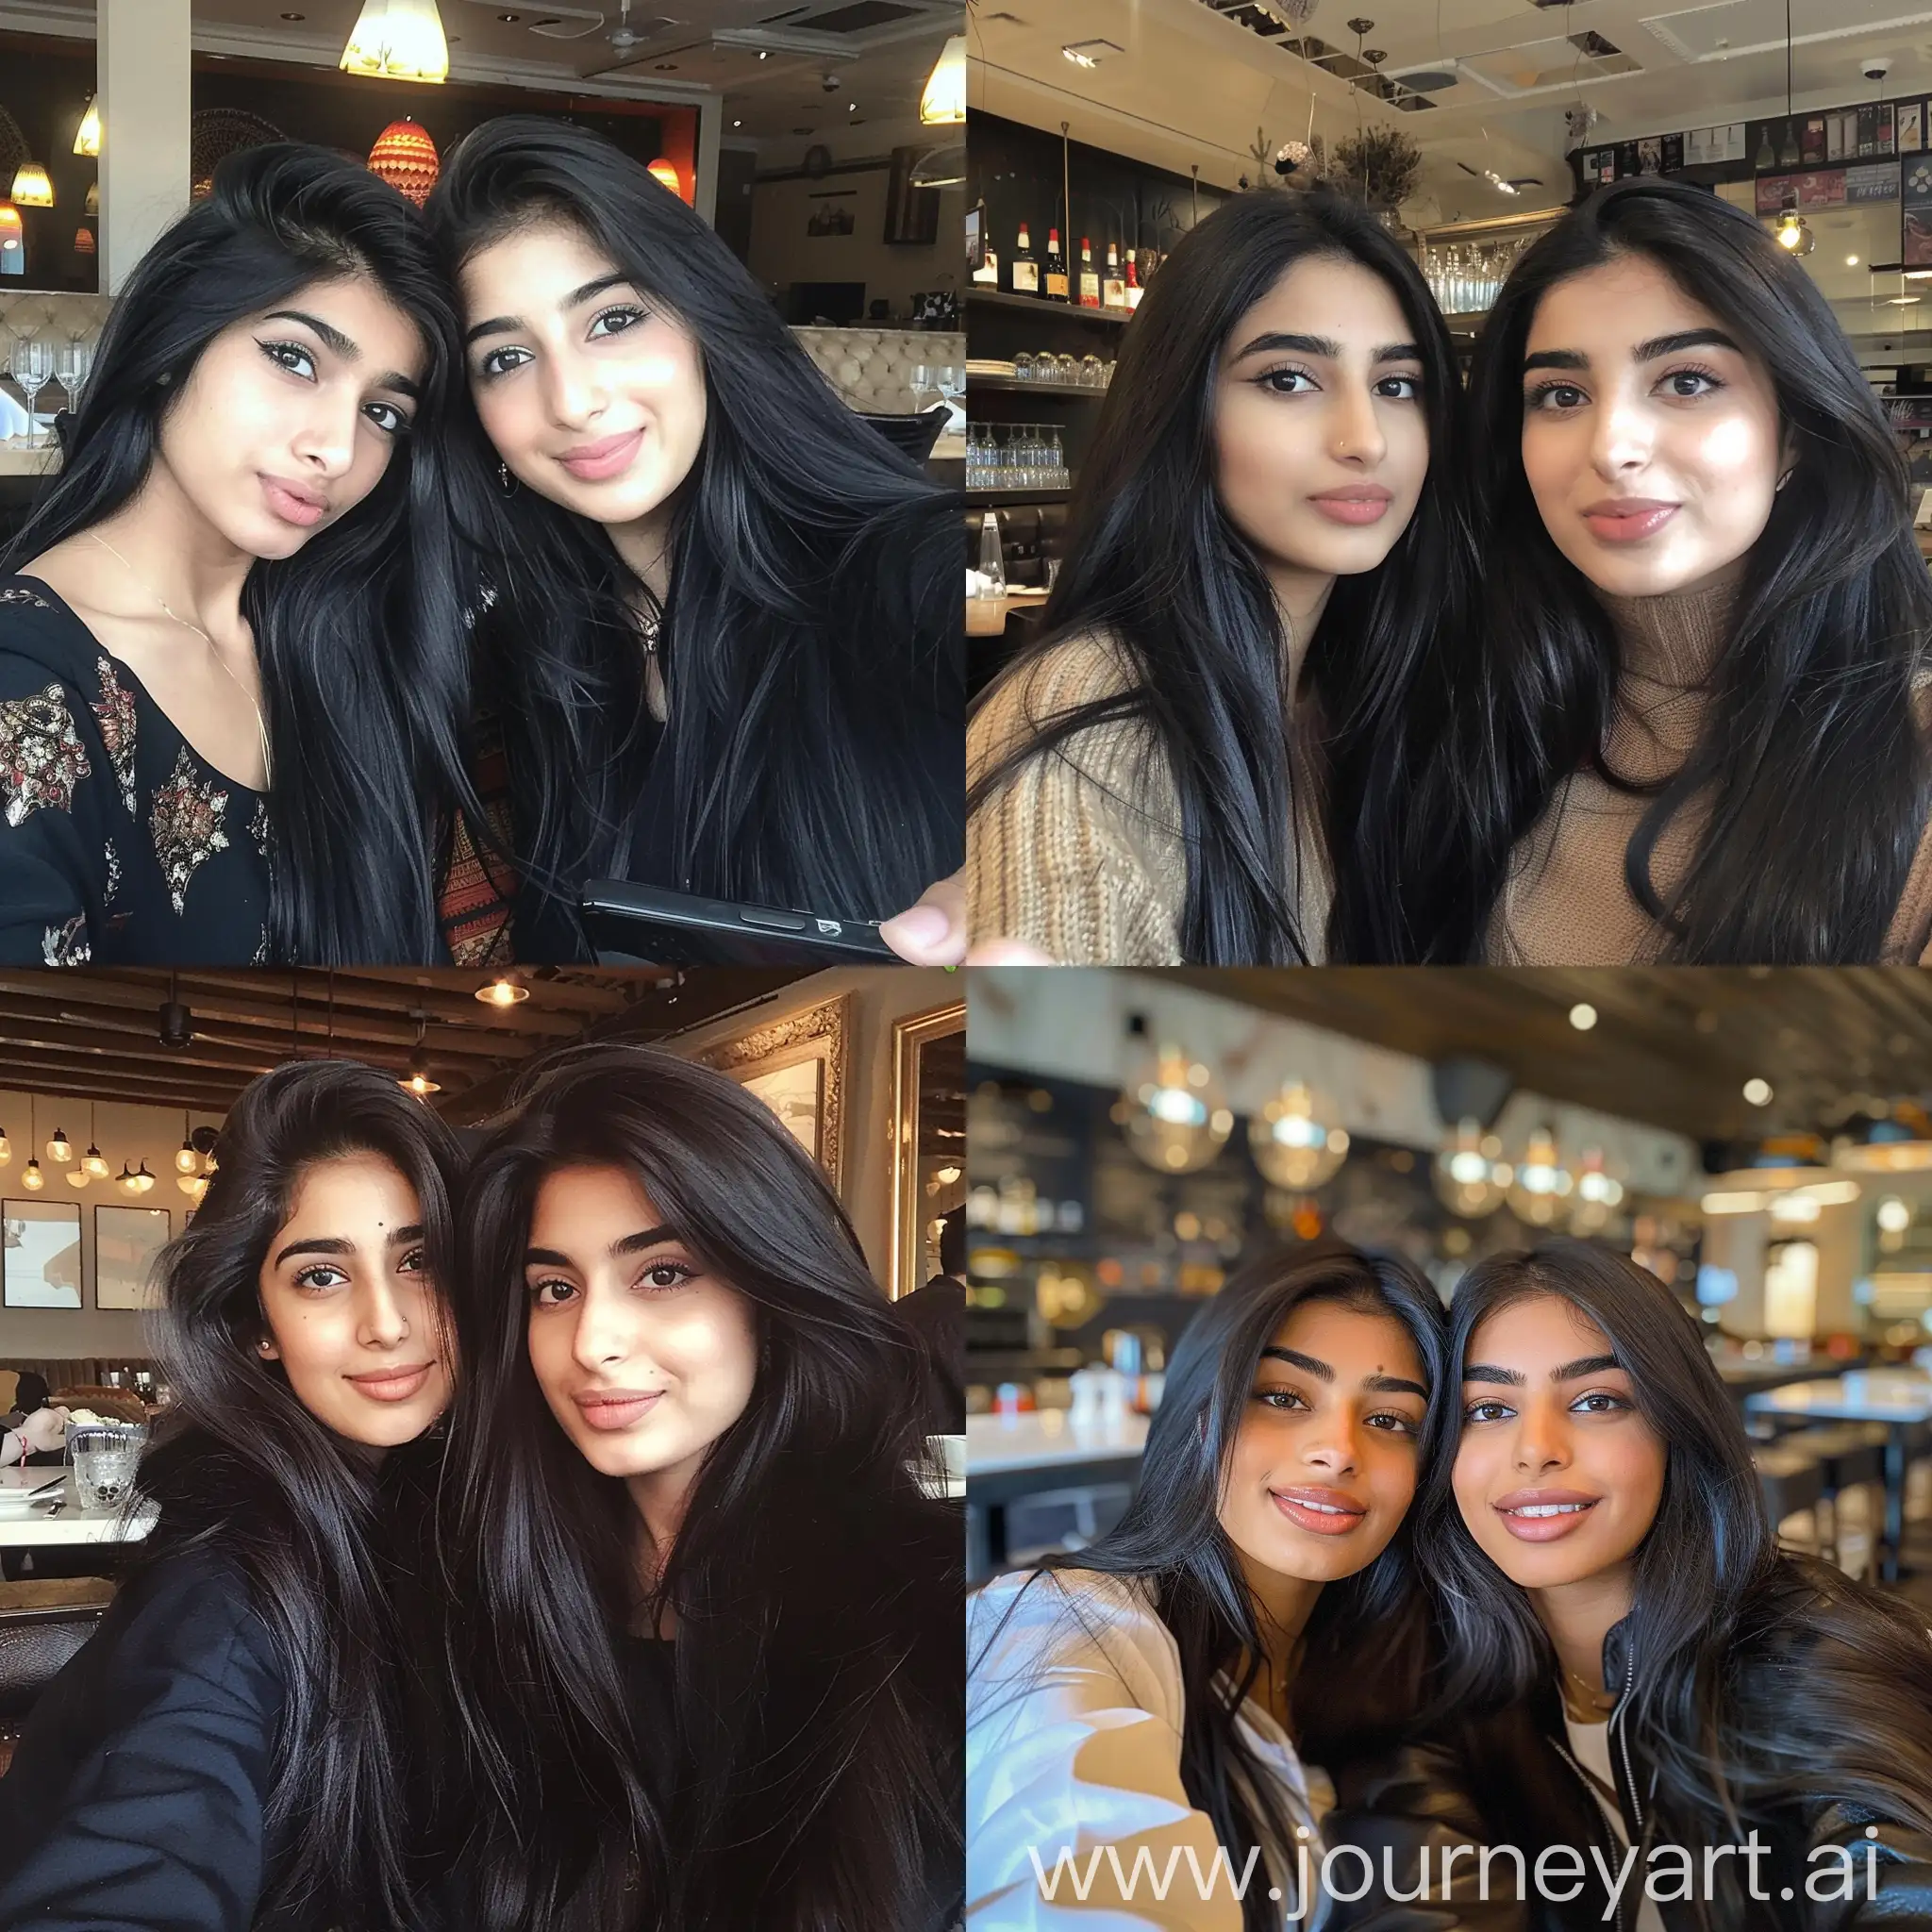 Stylish-British-Pakistani-Models-Capturing-Selfie-Moment-in-Chic-Restaurant